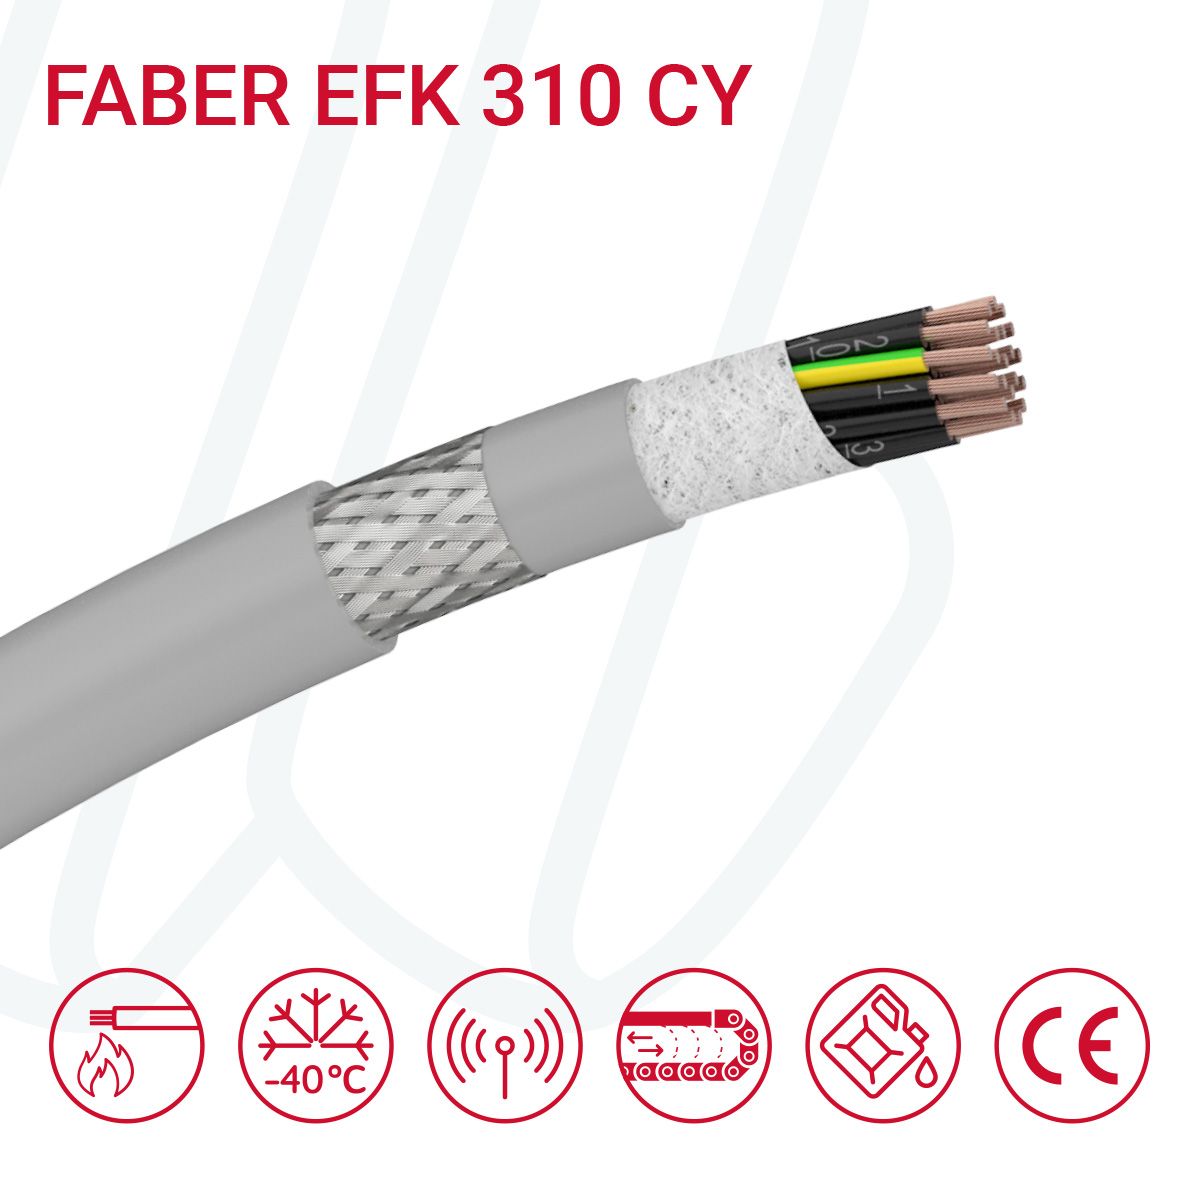 Кабель FABER EFK 310 CY 07G1 cUL сірий, 07, 1.0